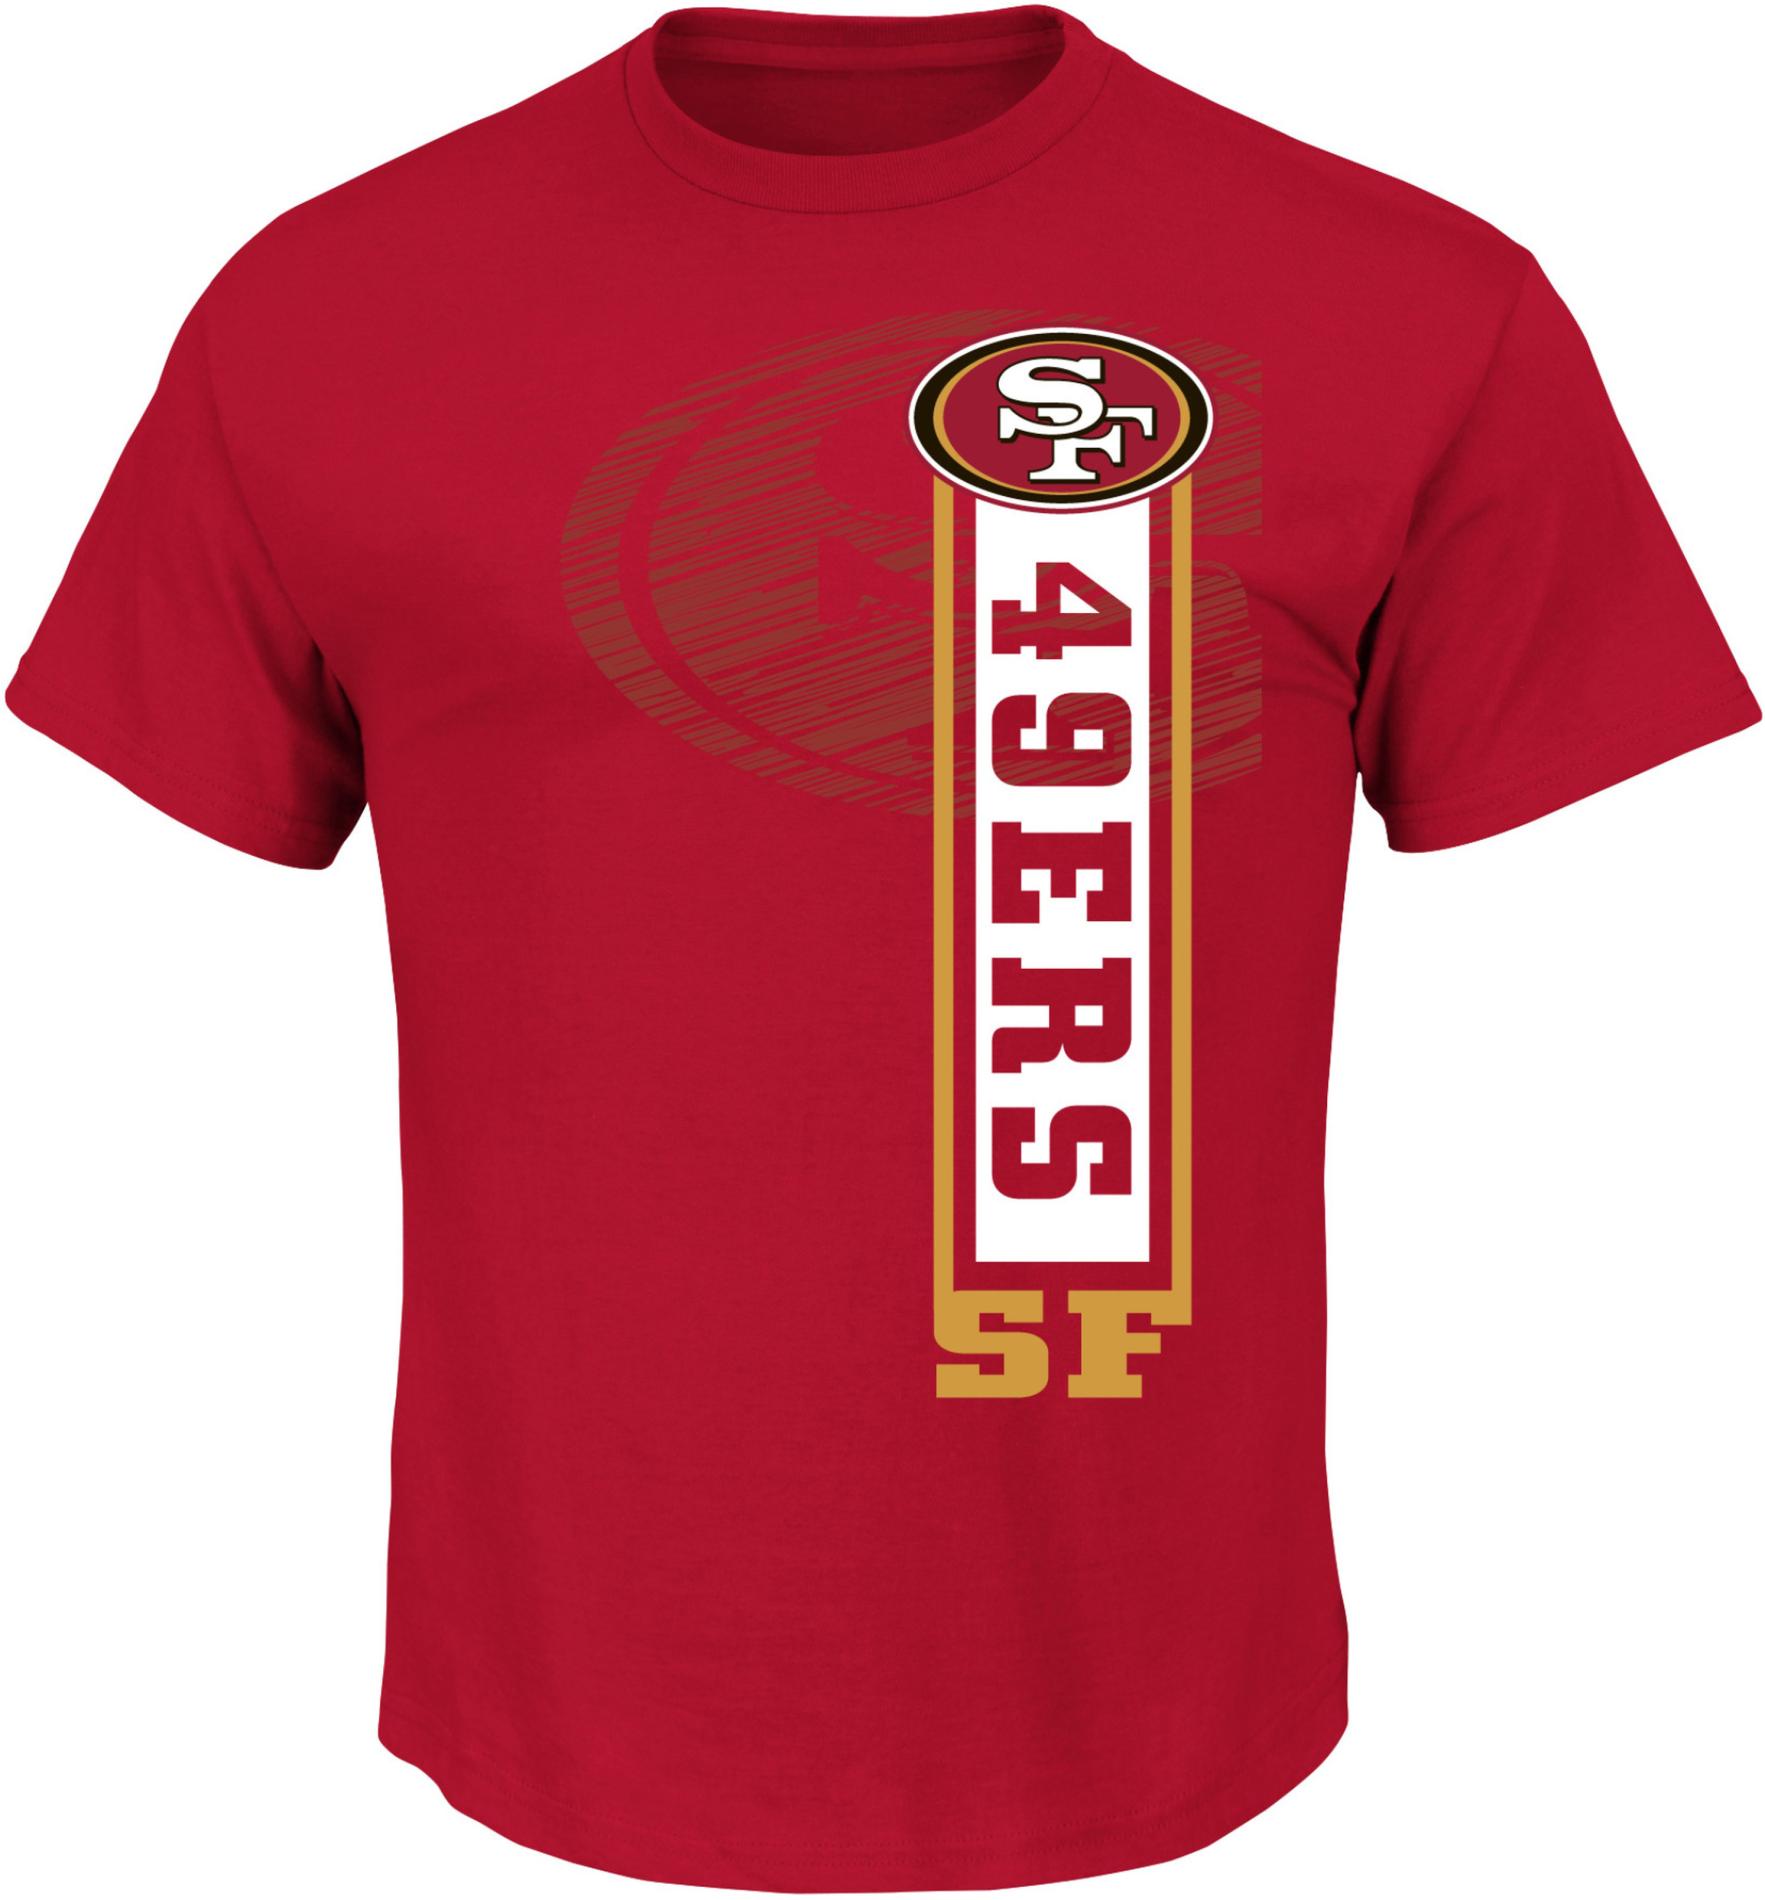 NFL Men's Short-Sleeve T-Shirt - San Francisco 49ers | Shop Your Way ...